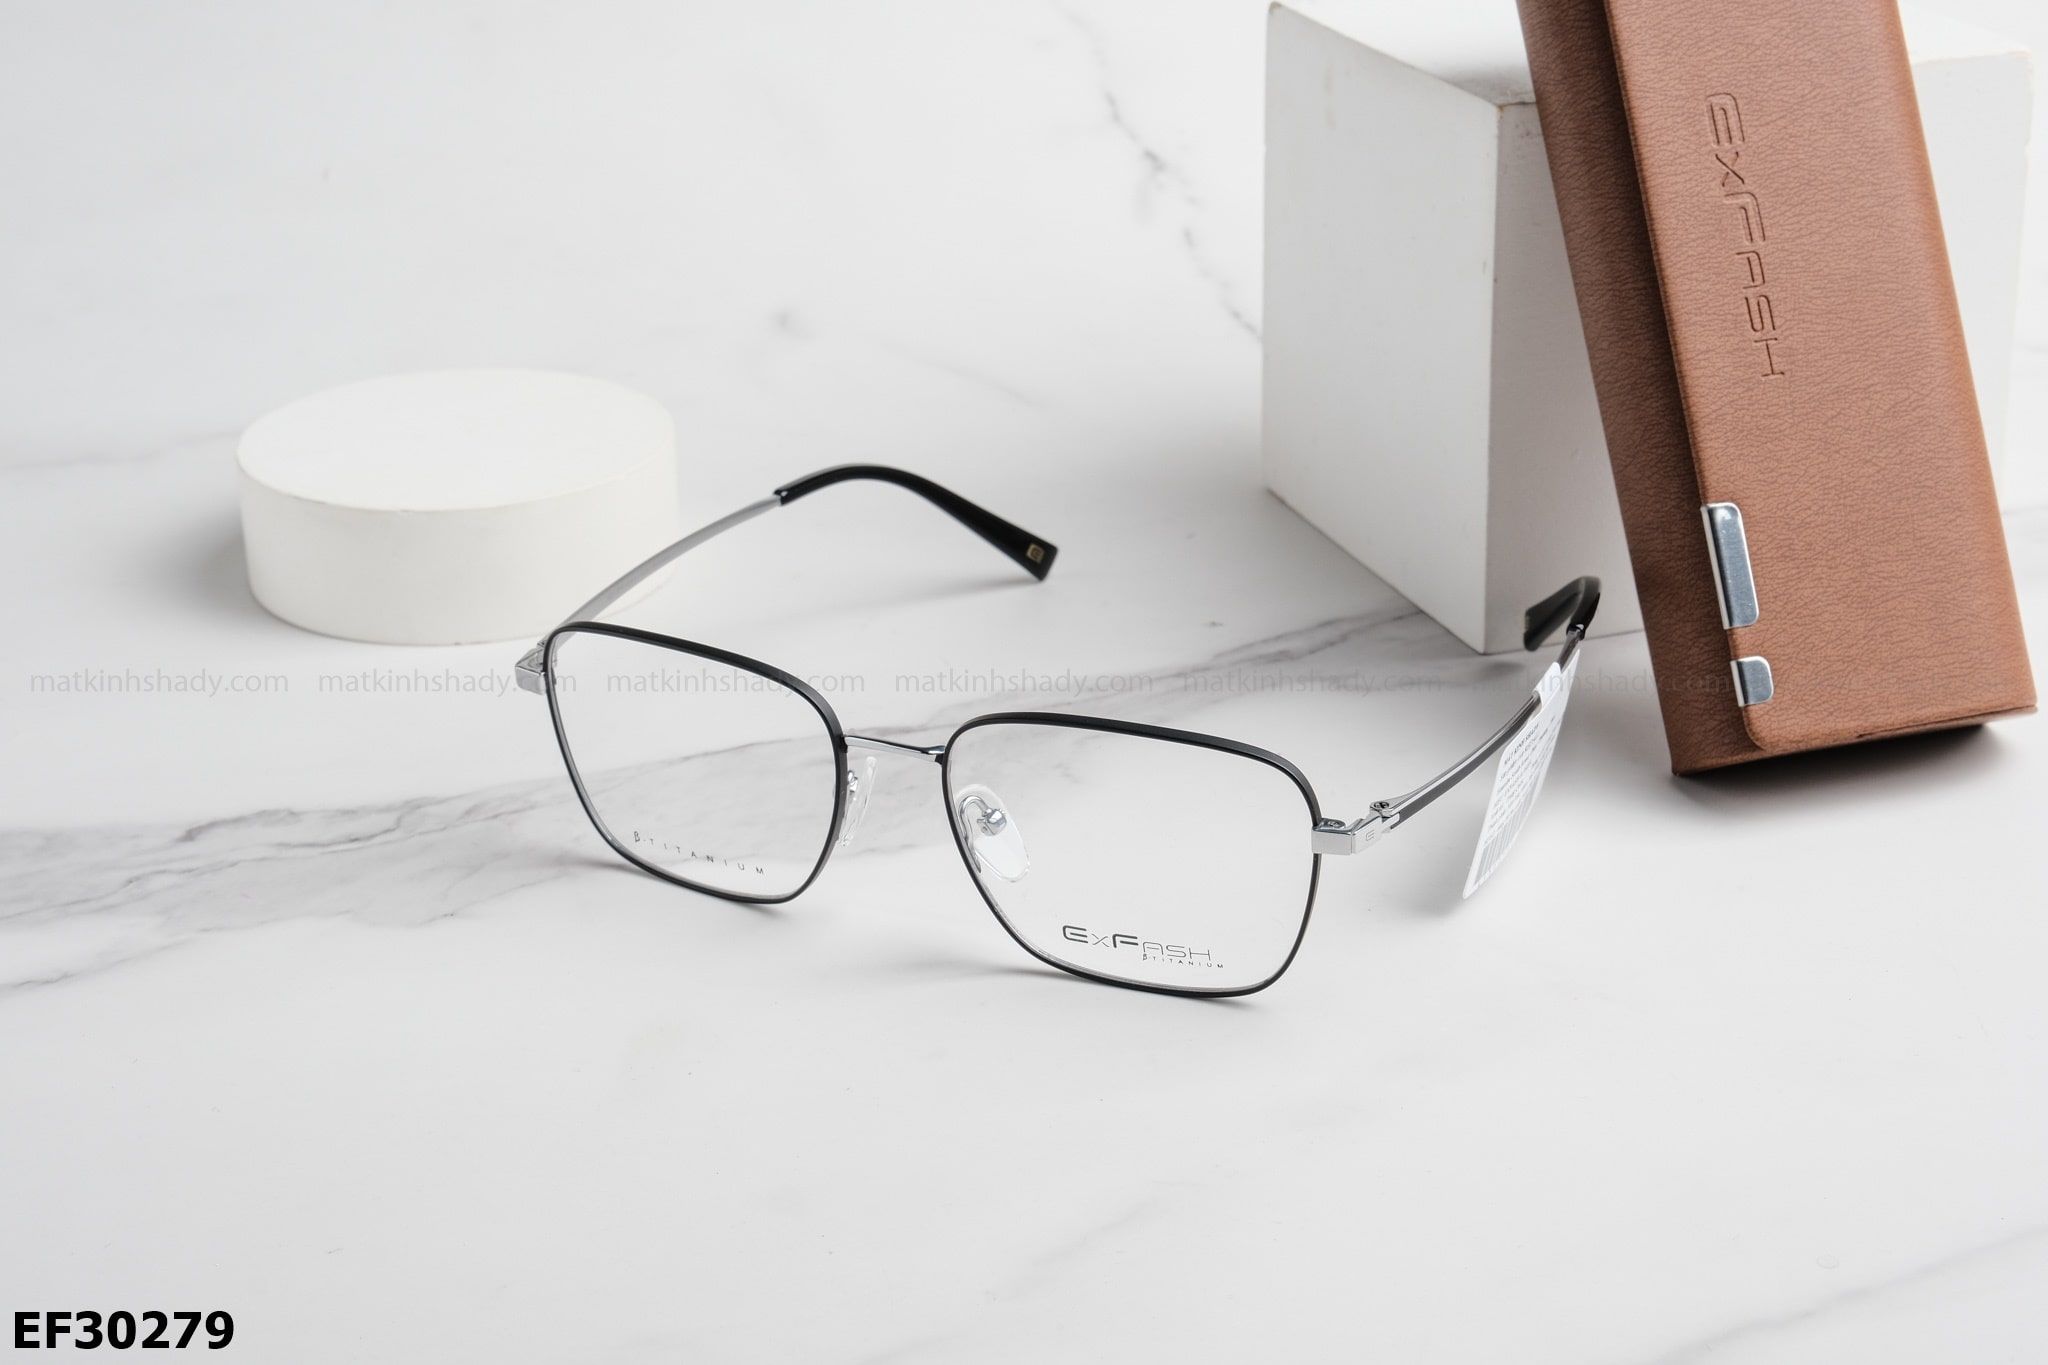  Exfash Eyewear - Glasses - EF30279 